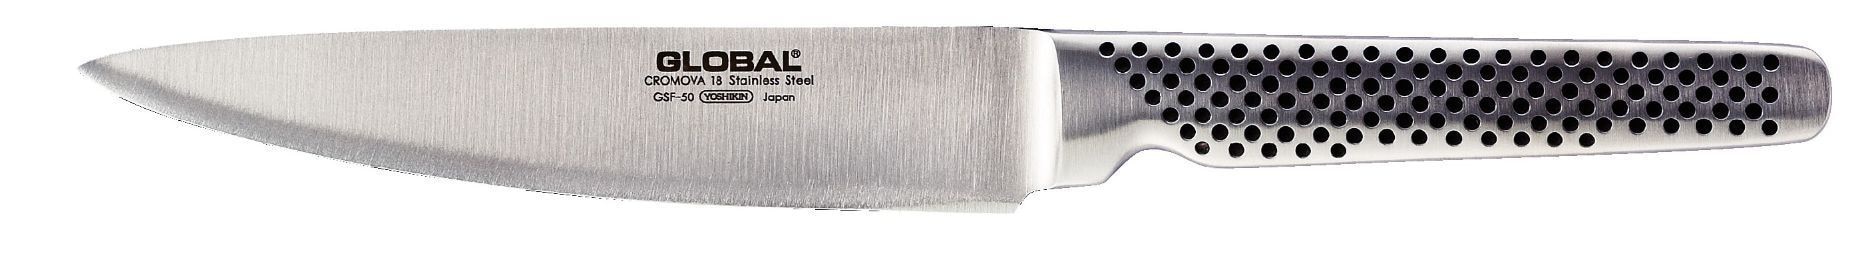 סכין עזר 15 ס"מ GLOBAL GSF-50 - 